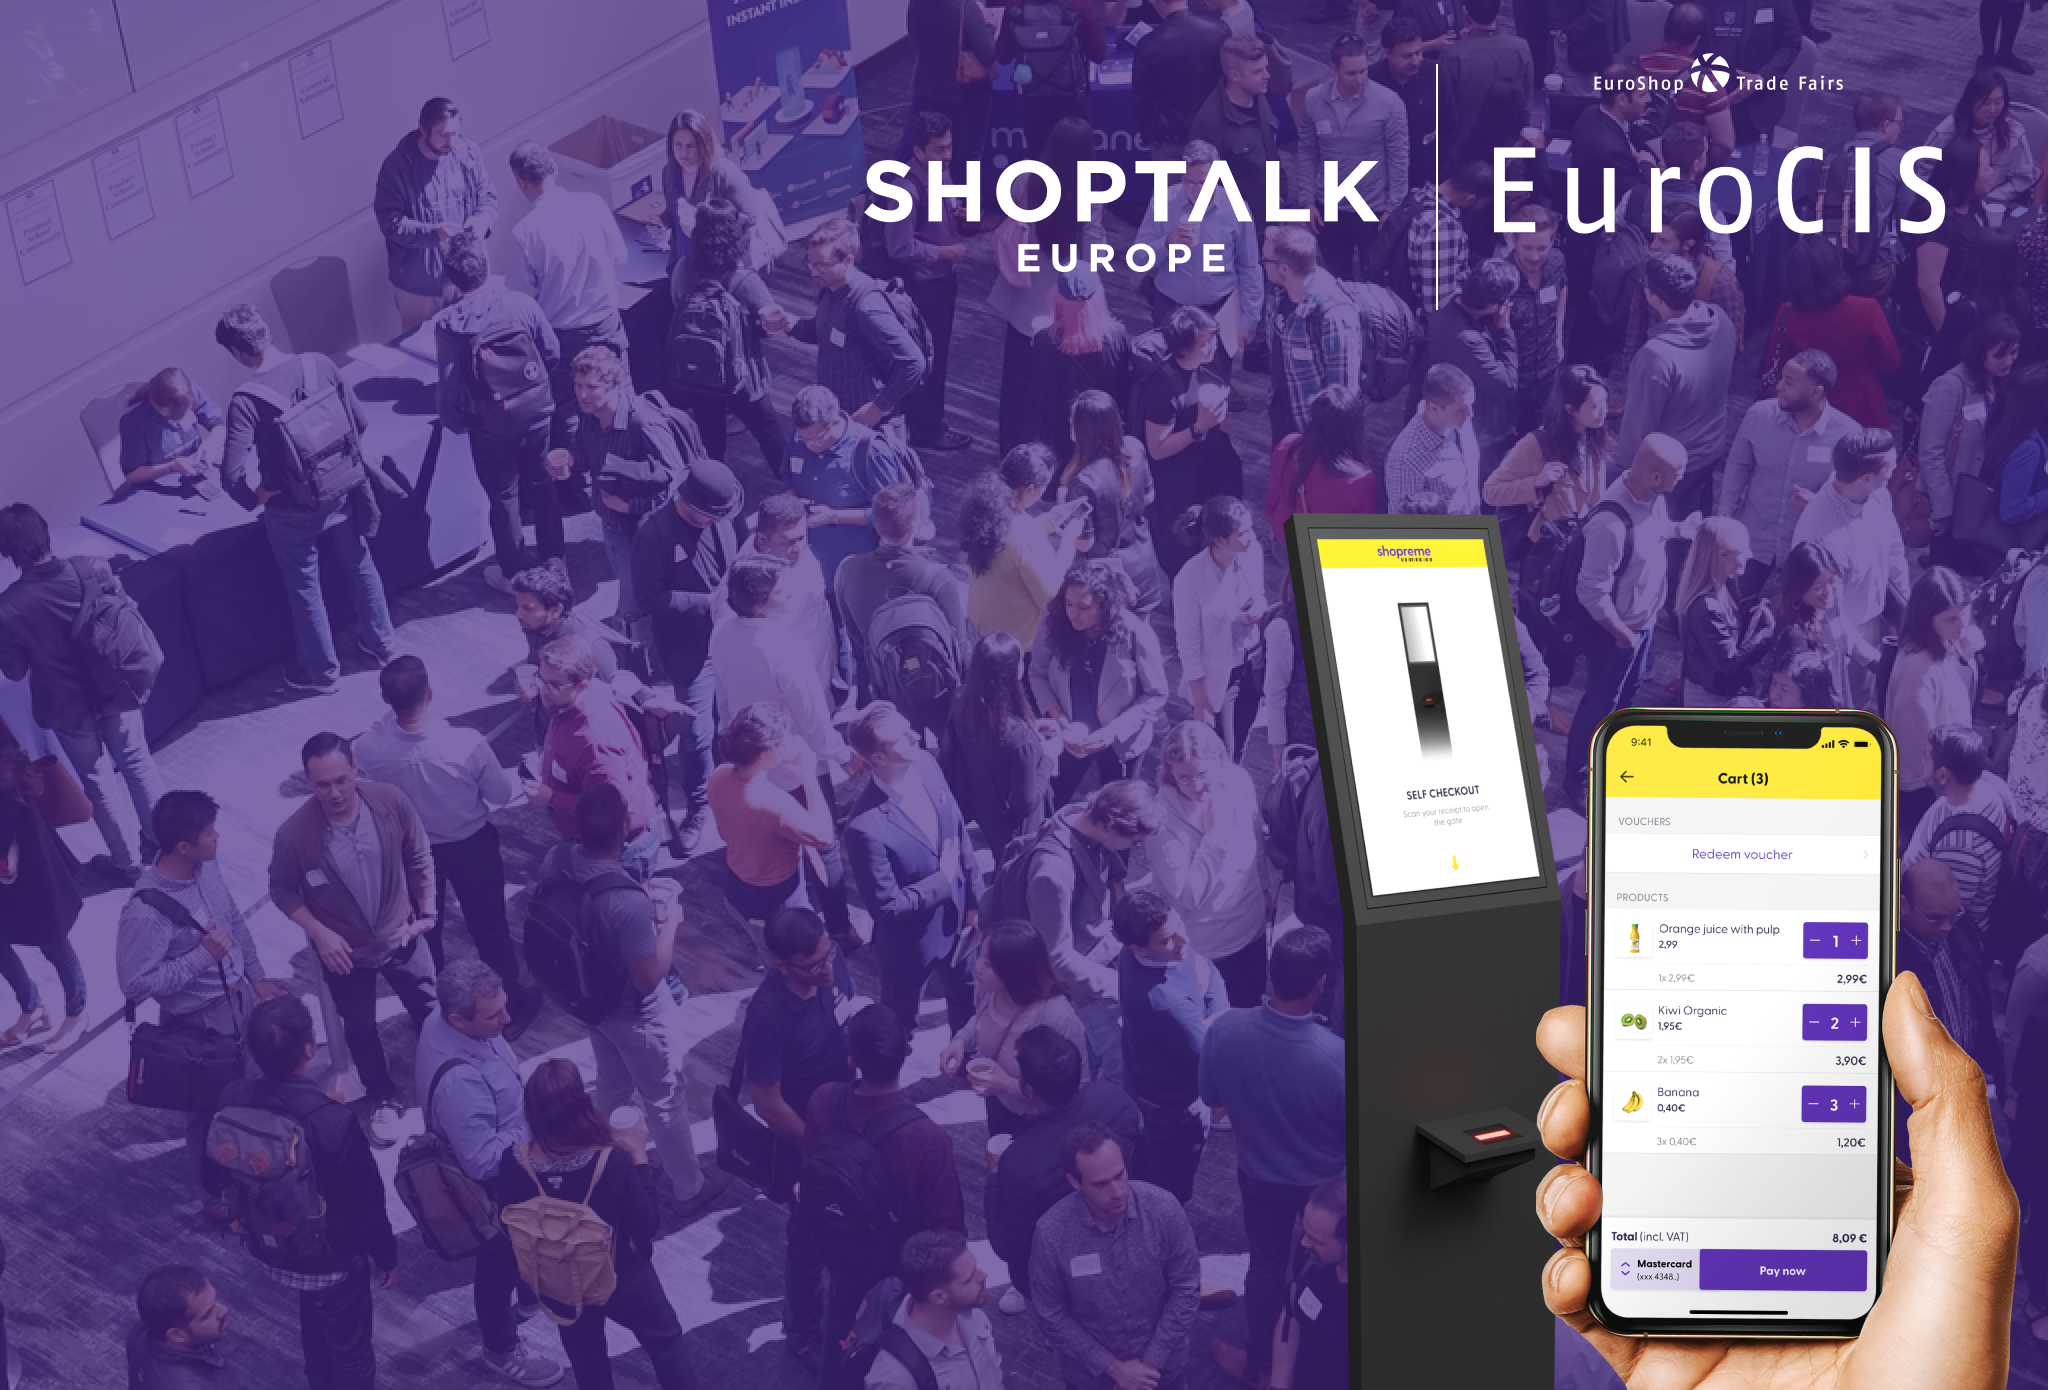 shopreme Presents Exit Hardware vector at EuroCIS & Shoptalk Europe